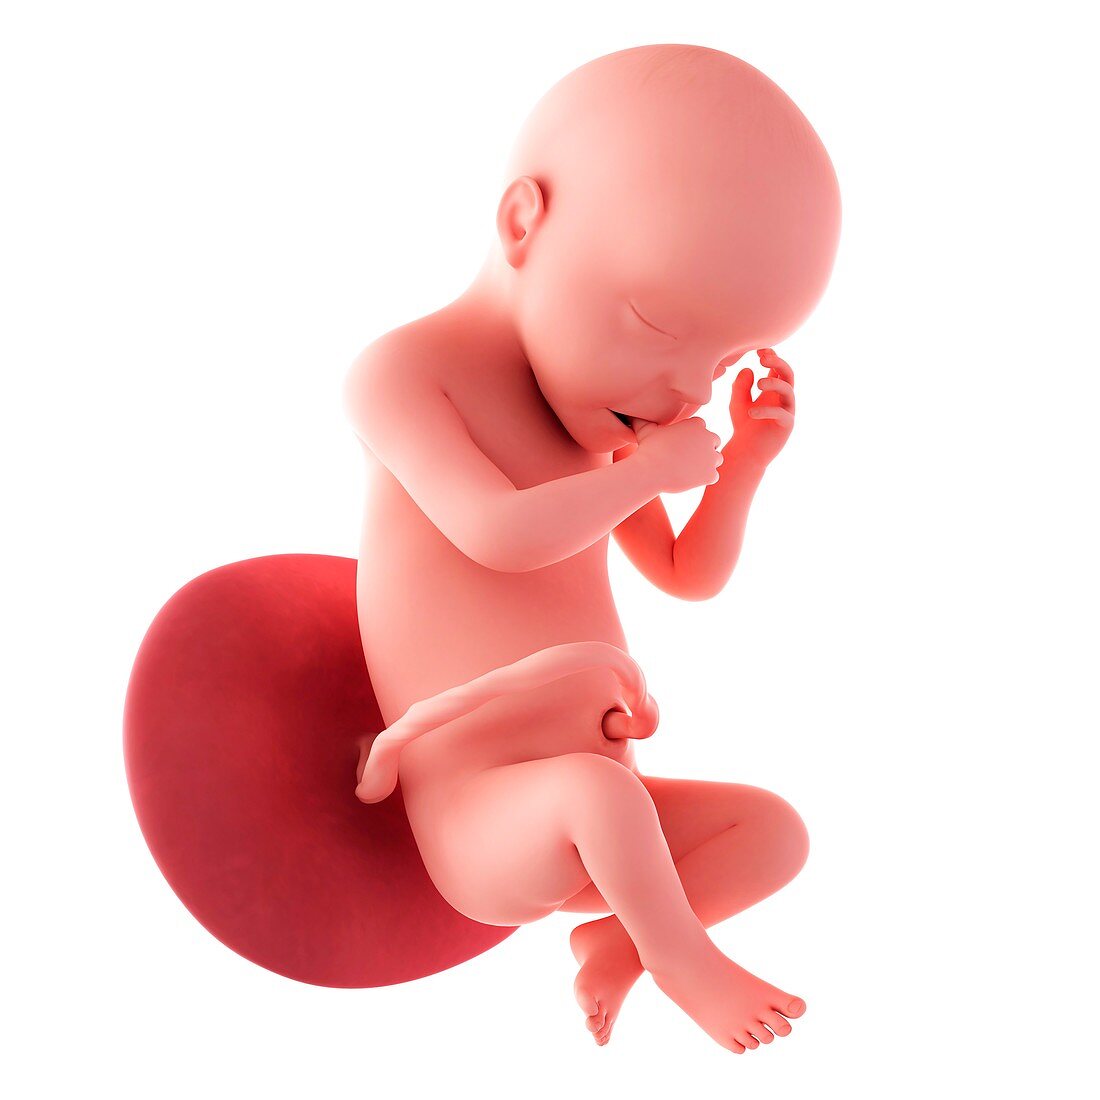 Human fetus age 30 weeks